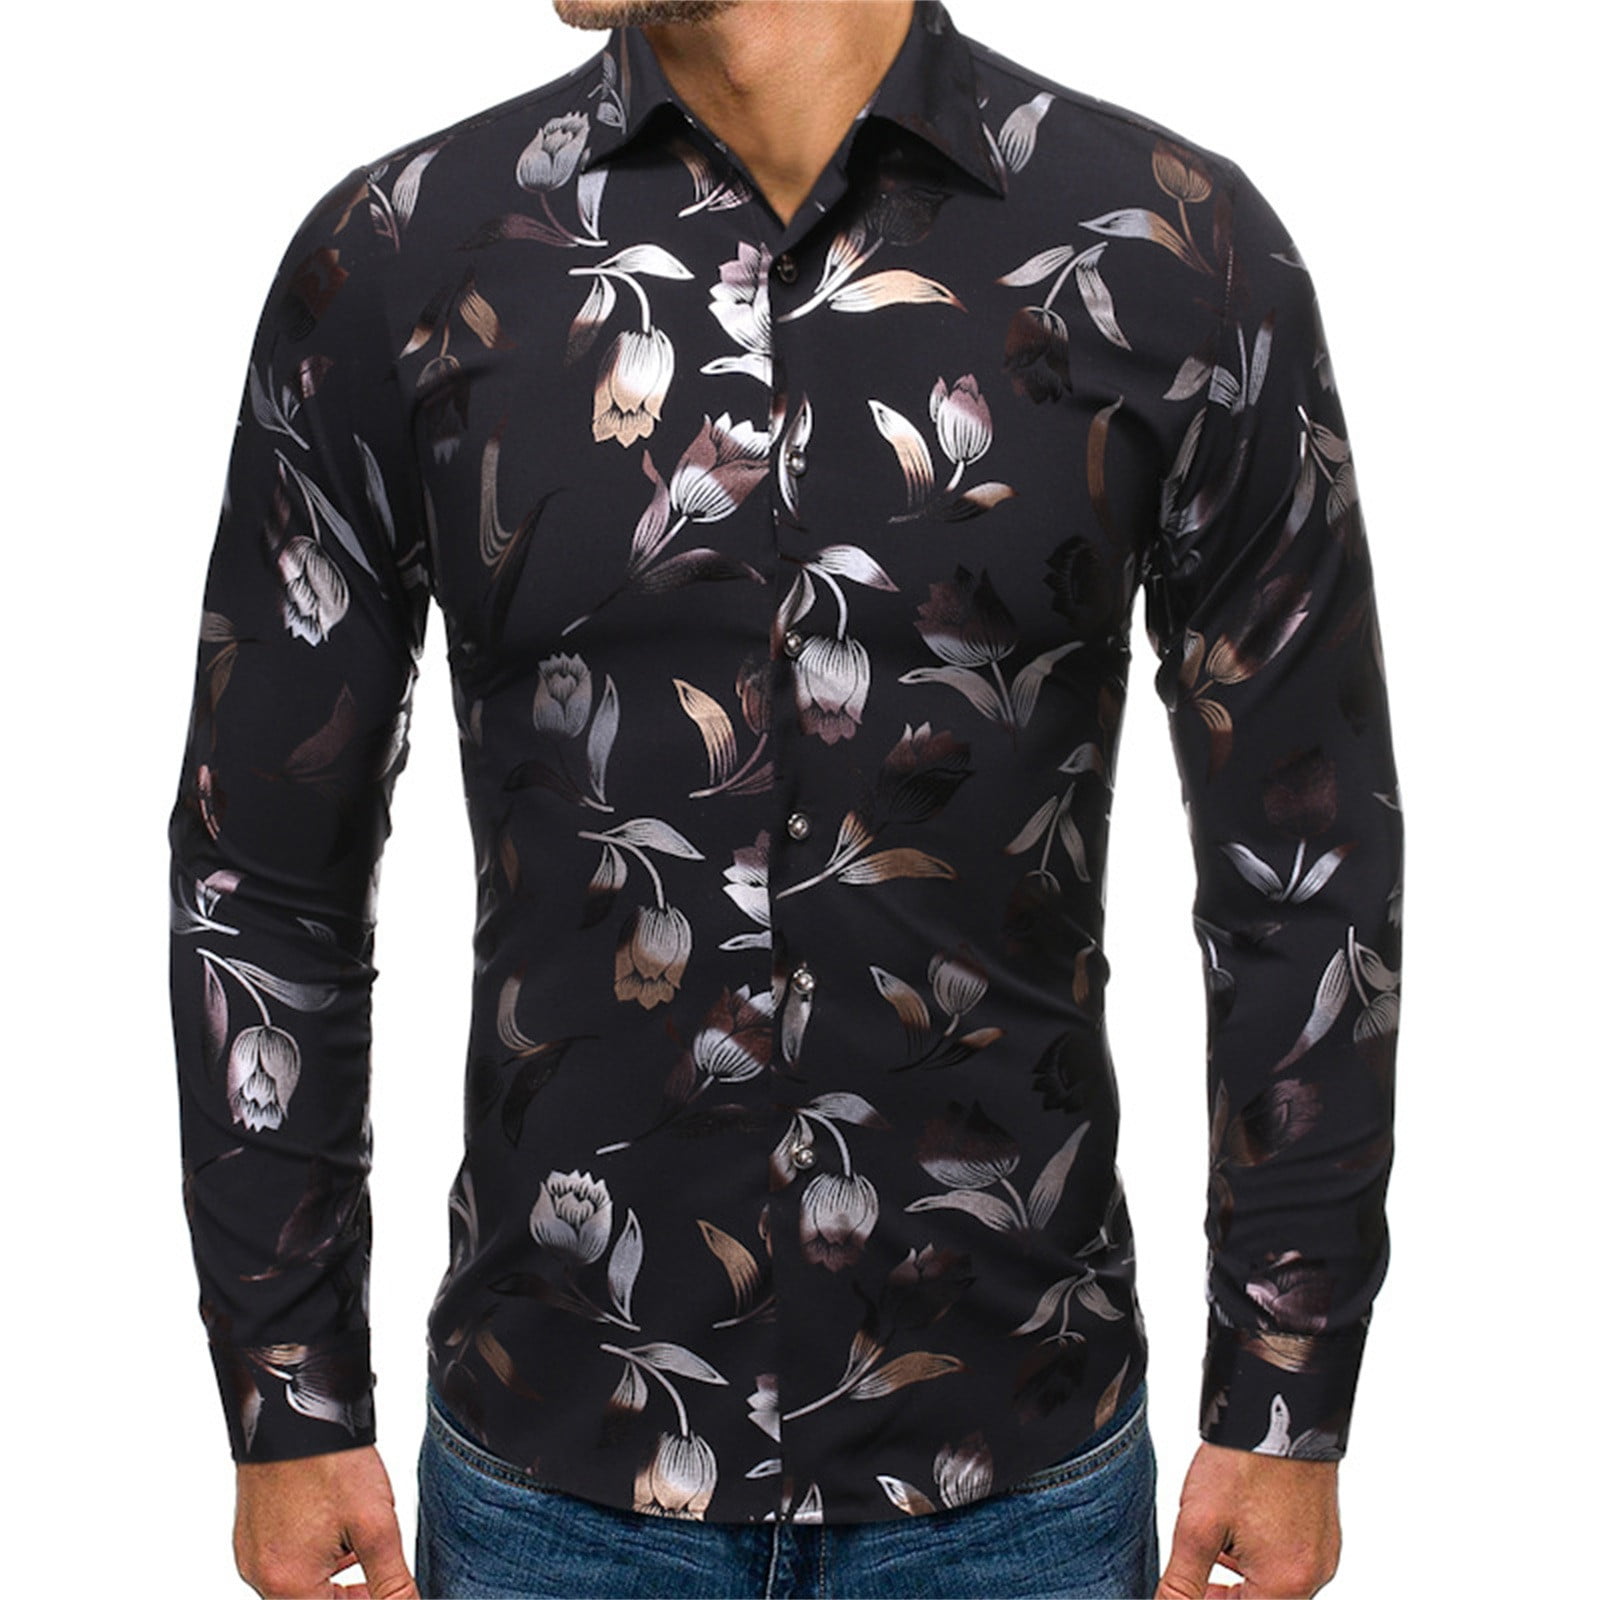 SDCSQ Mens Long Sleeve Shirts Vintage Elegant Button Ethnic Printed Loose Casual Comfy Shirt Top 